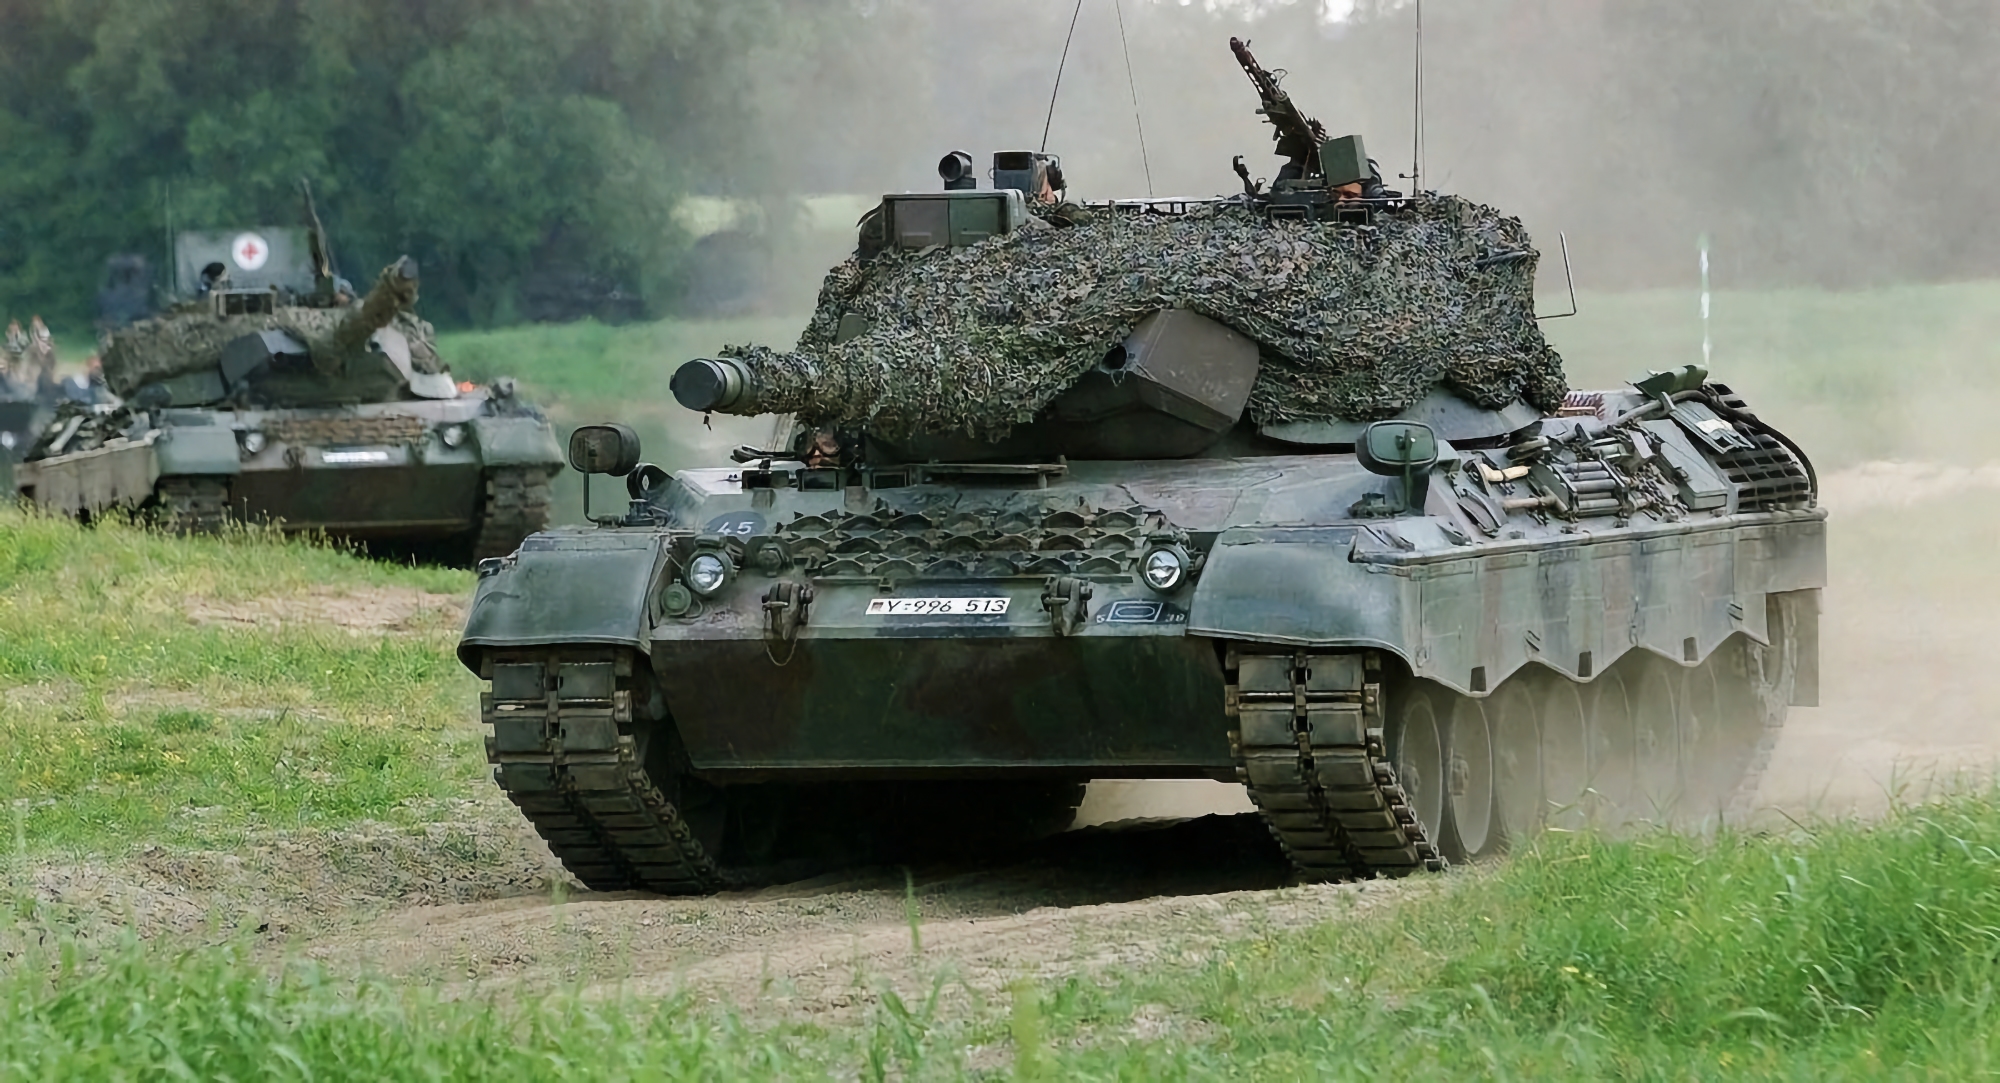 Stridsvagnar av typen Leopard 1A5, terrängfordon av typen Bandvagn 206, UAV:er av typen VECTOR och lastbilar av typen Zetros: Tyskland ger Ukraina ett nytt vapenpaket